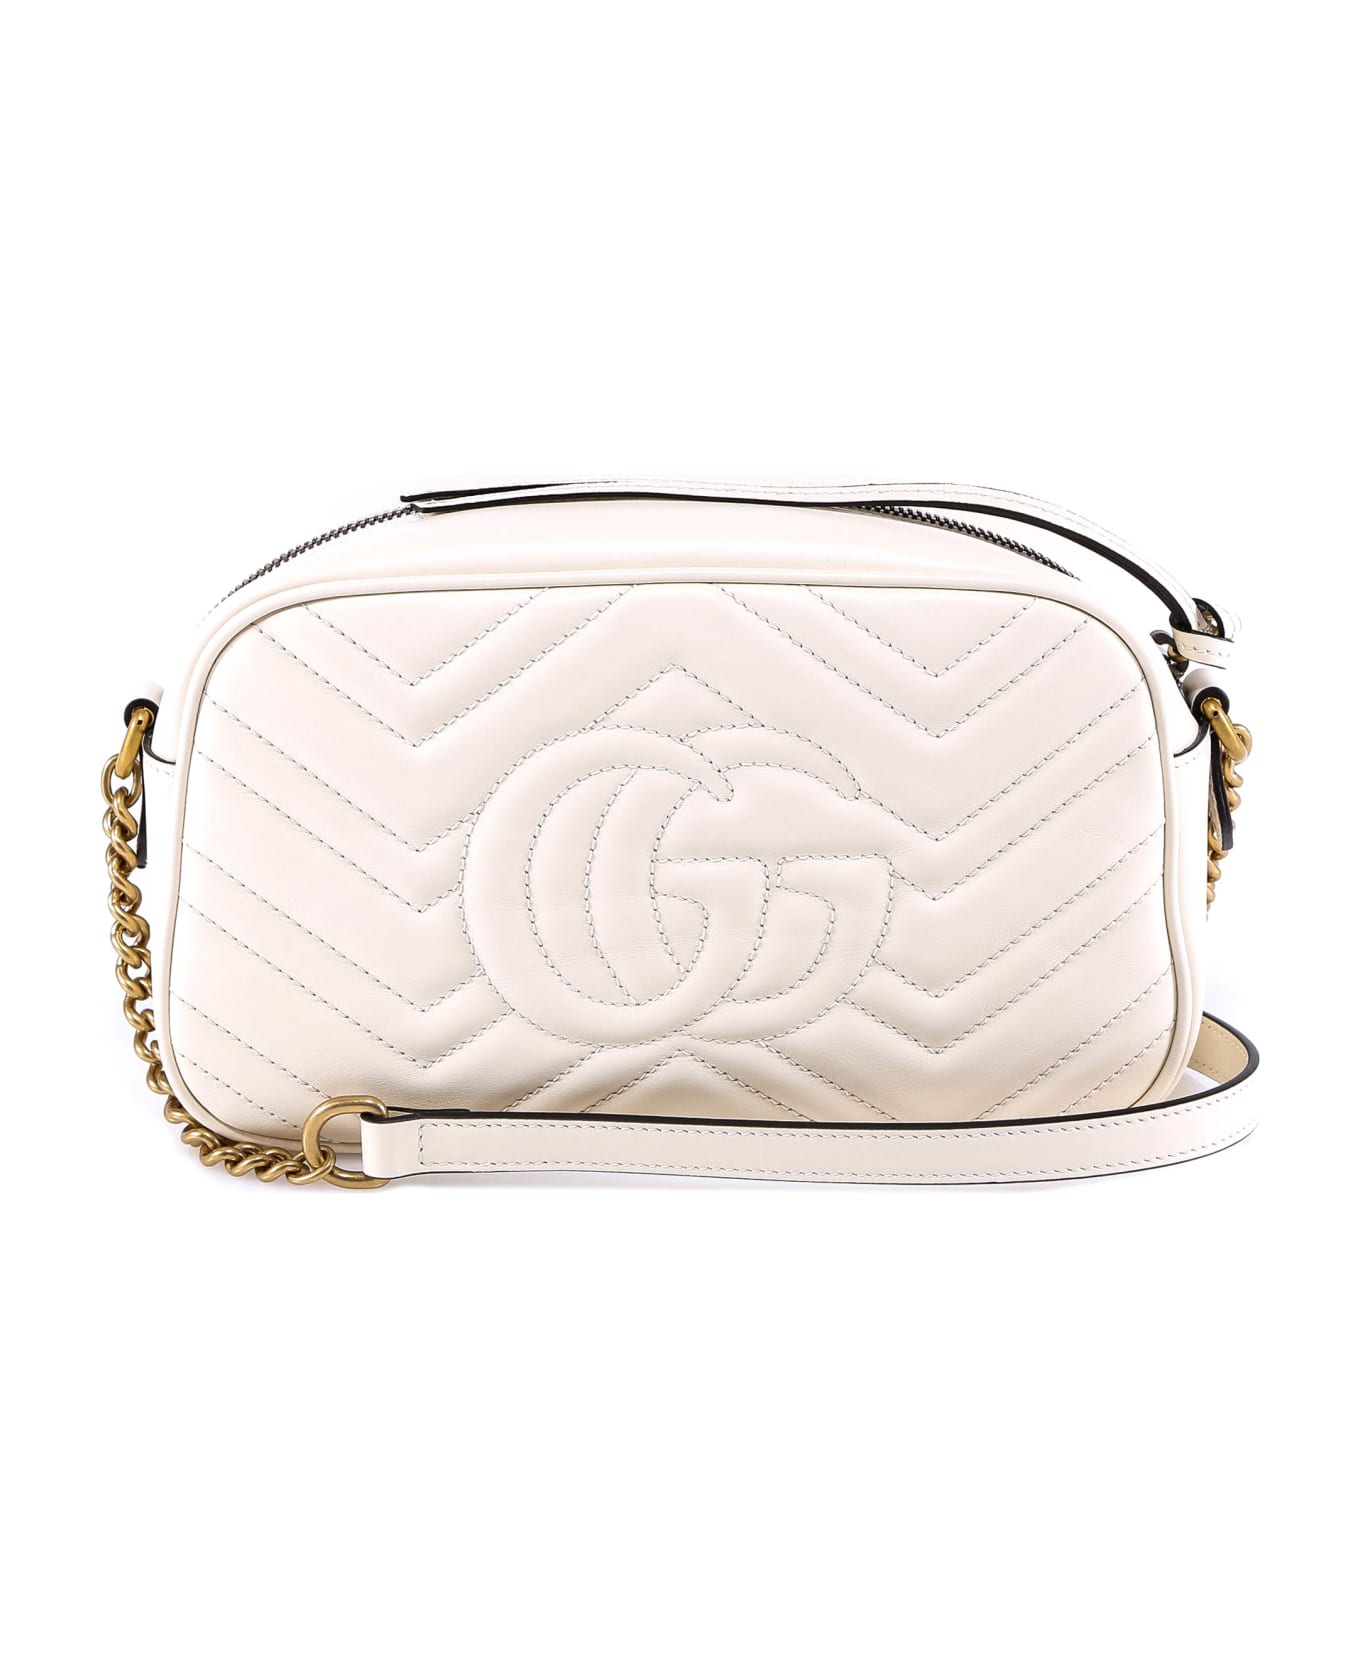 Gucci Gg Marmont Shoulder Bag - White